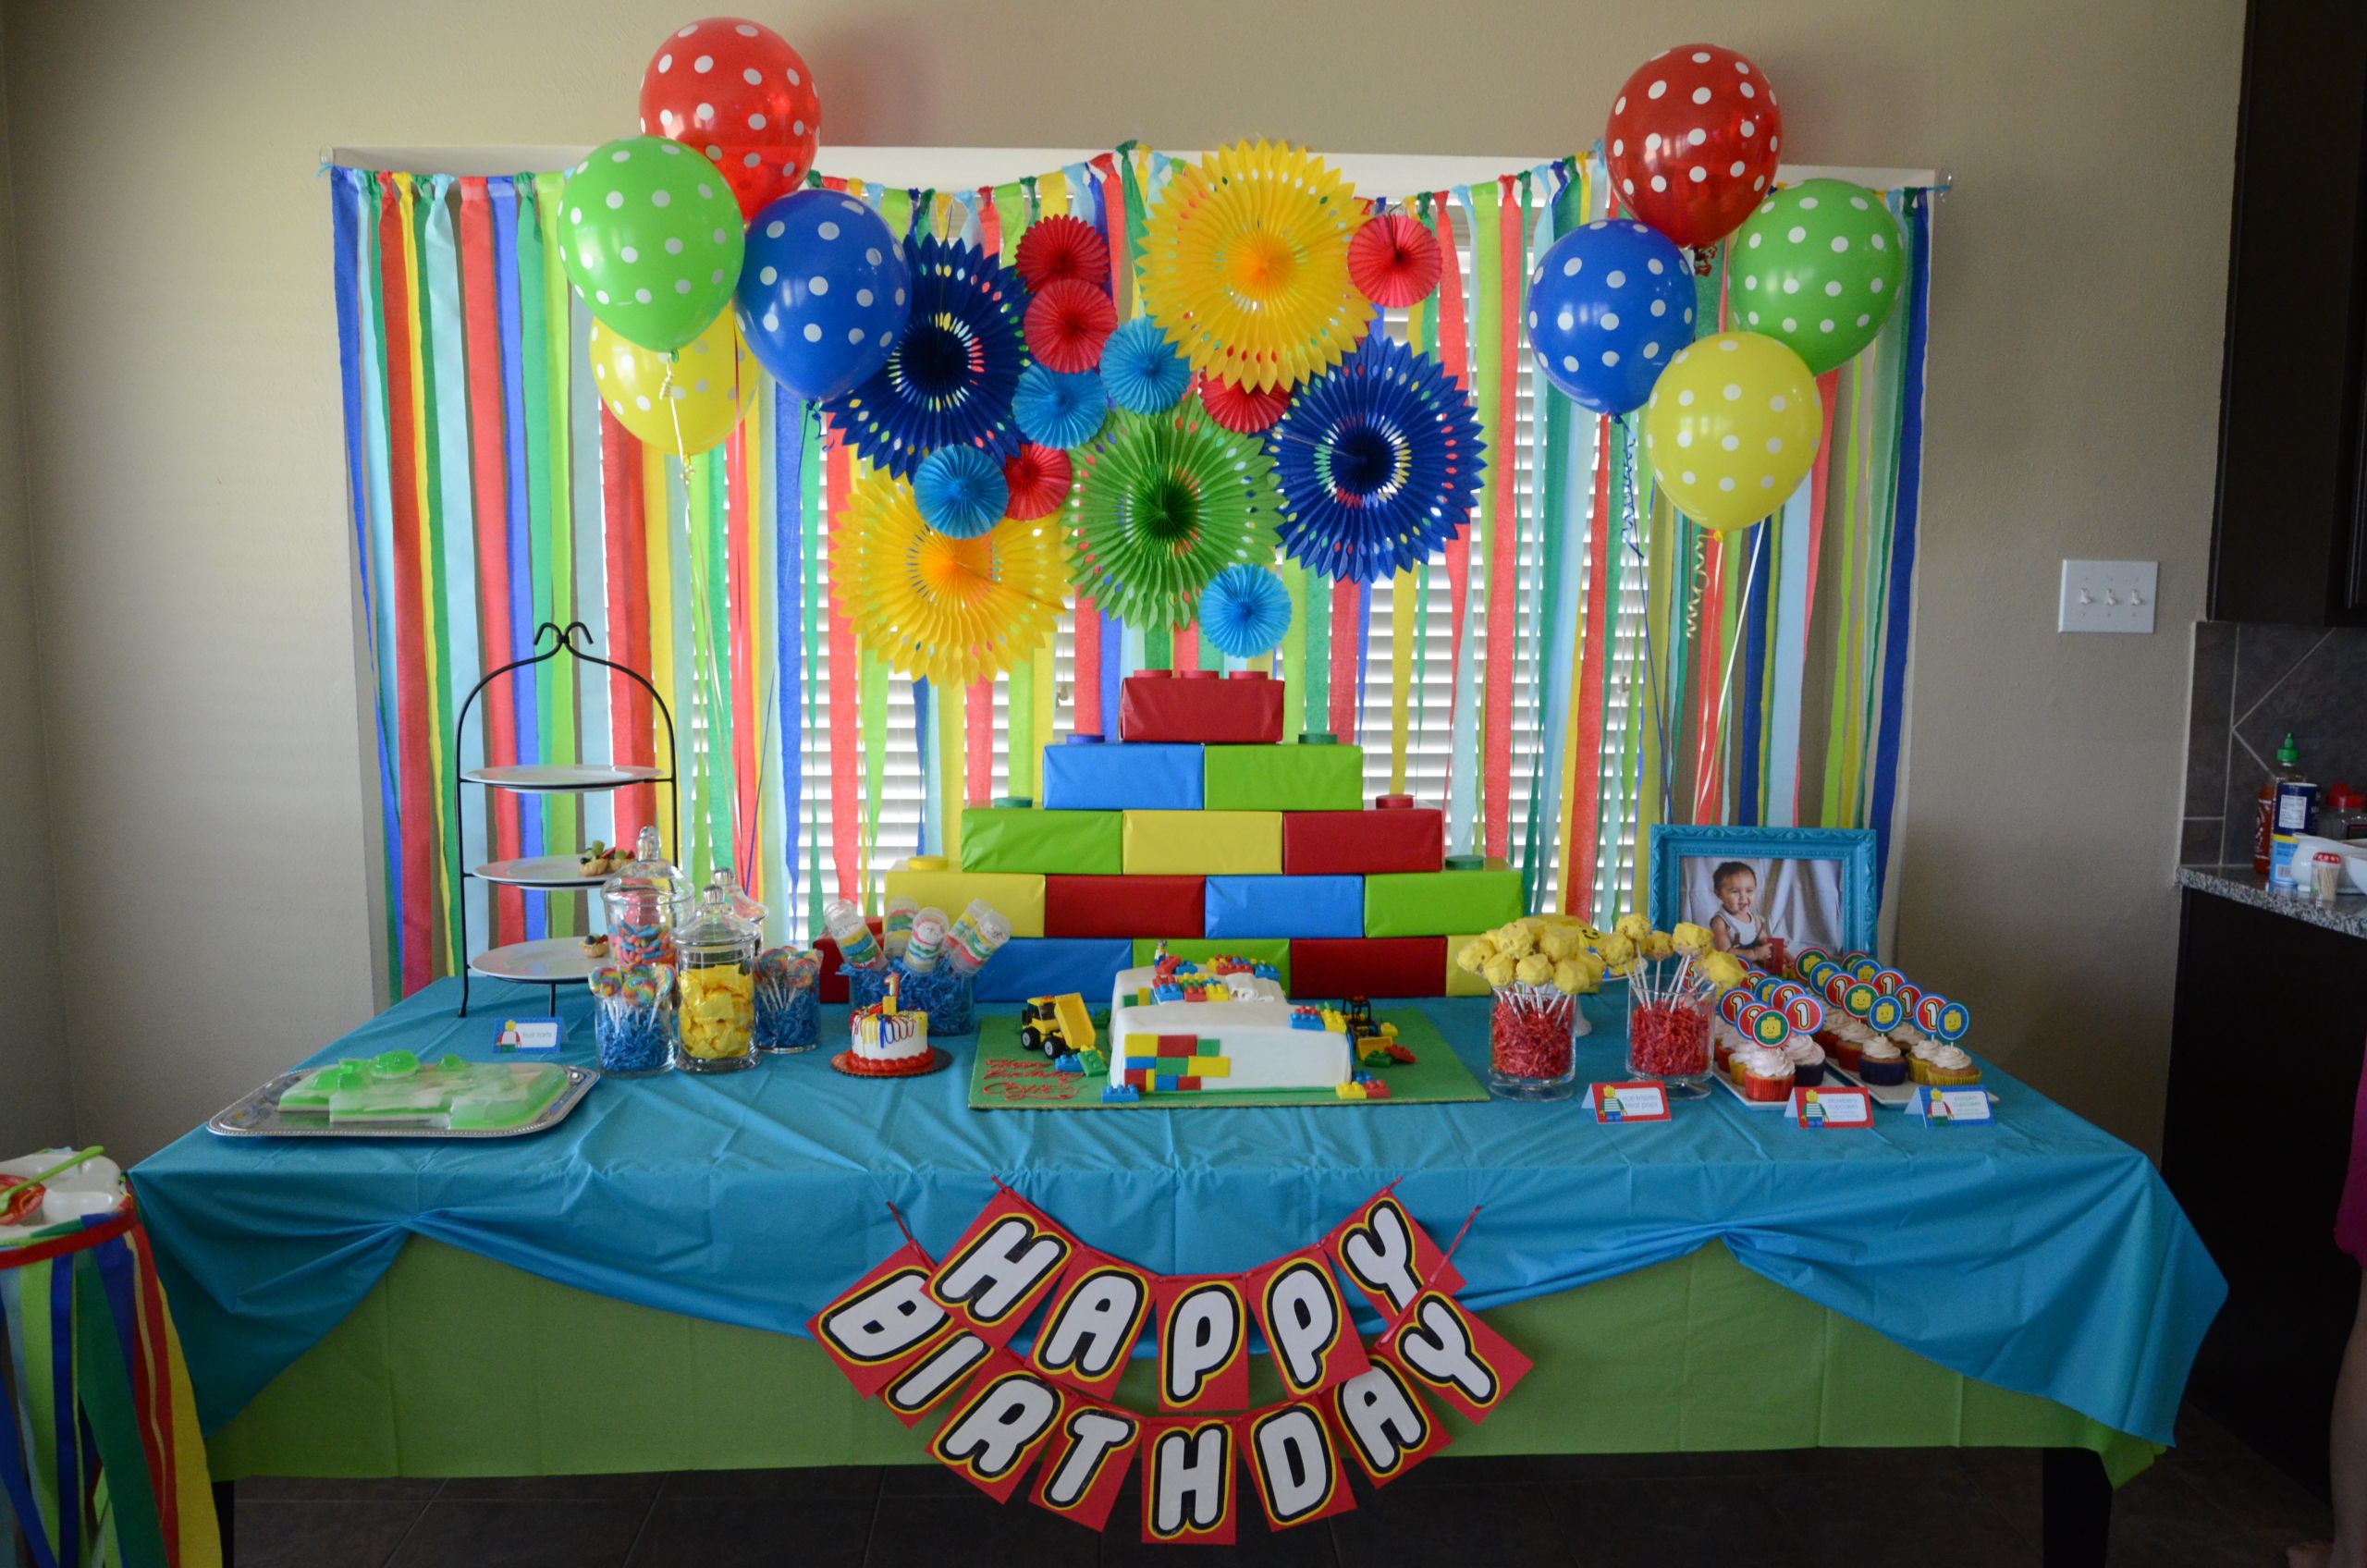 Lego Birthday Party Supplies
 LEGO THEMED BIRTHDAY PARTY